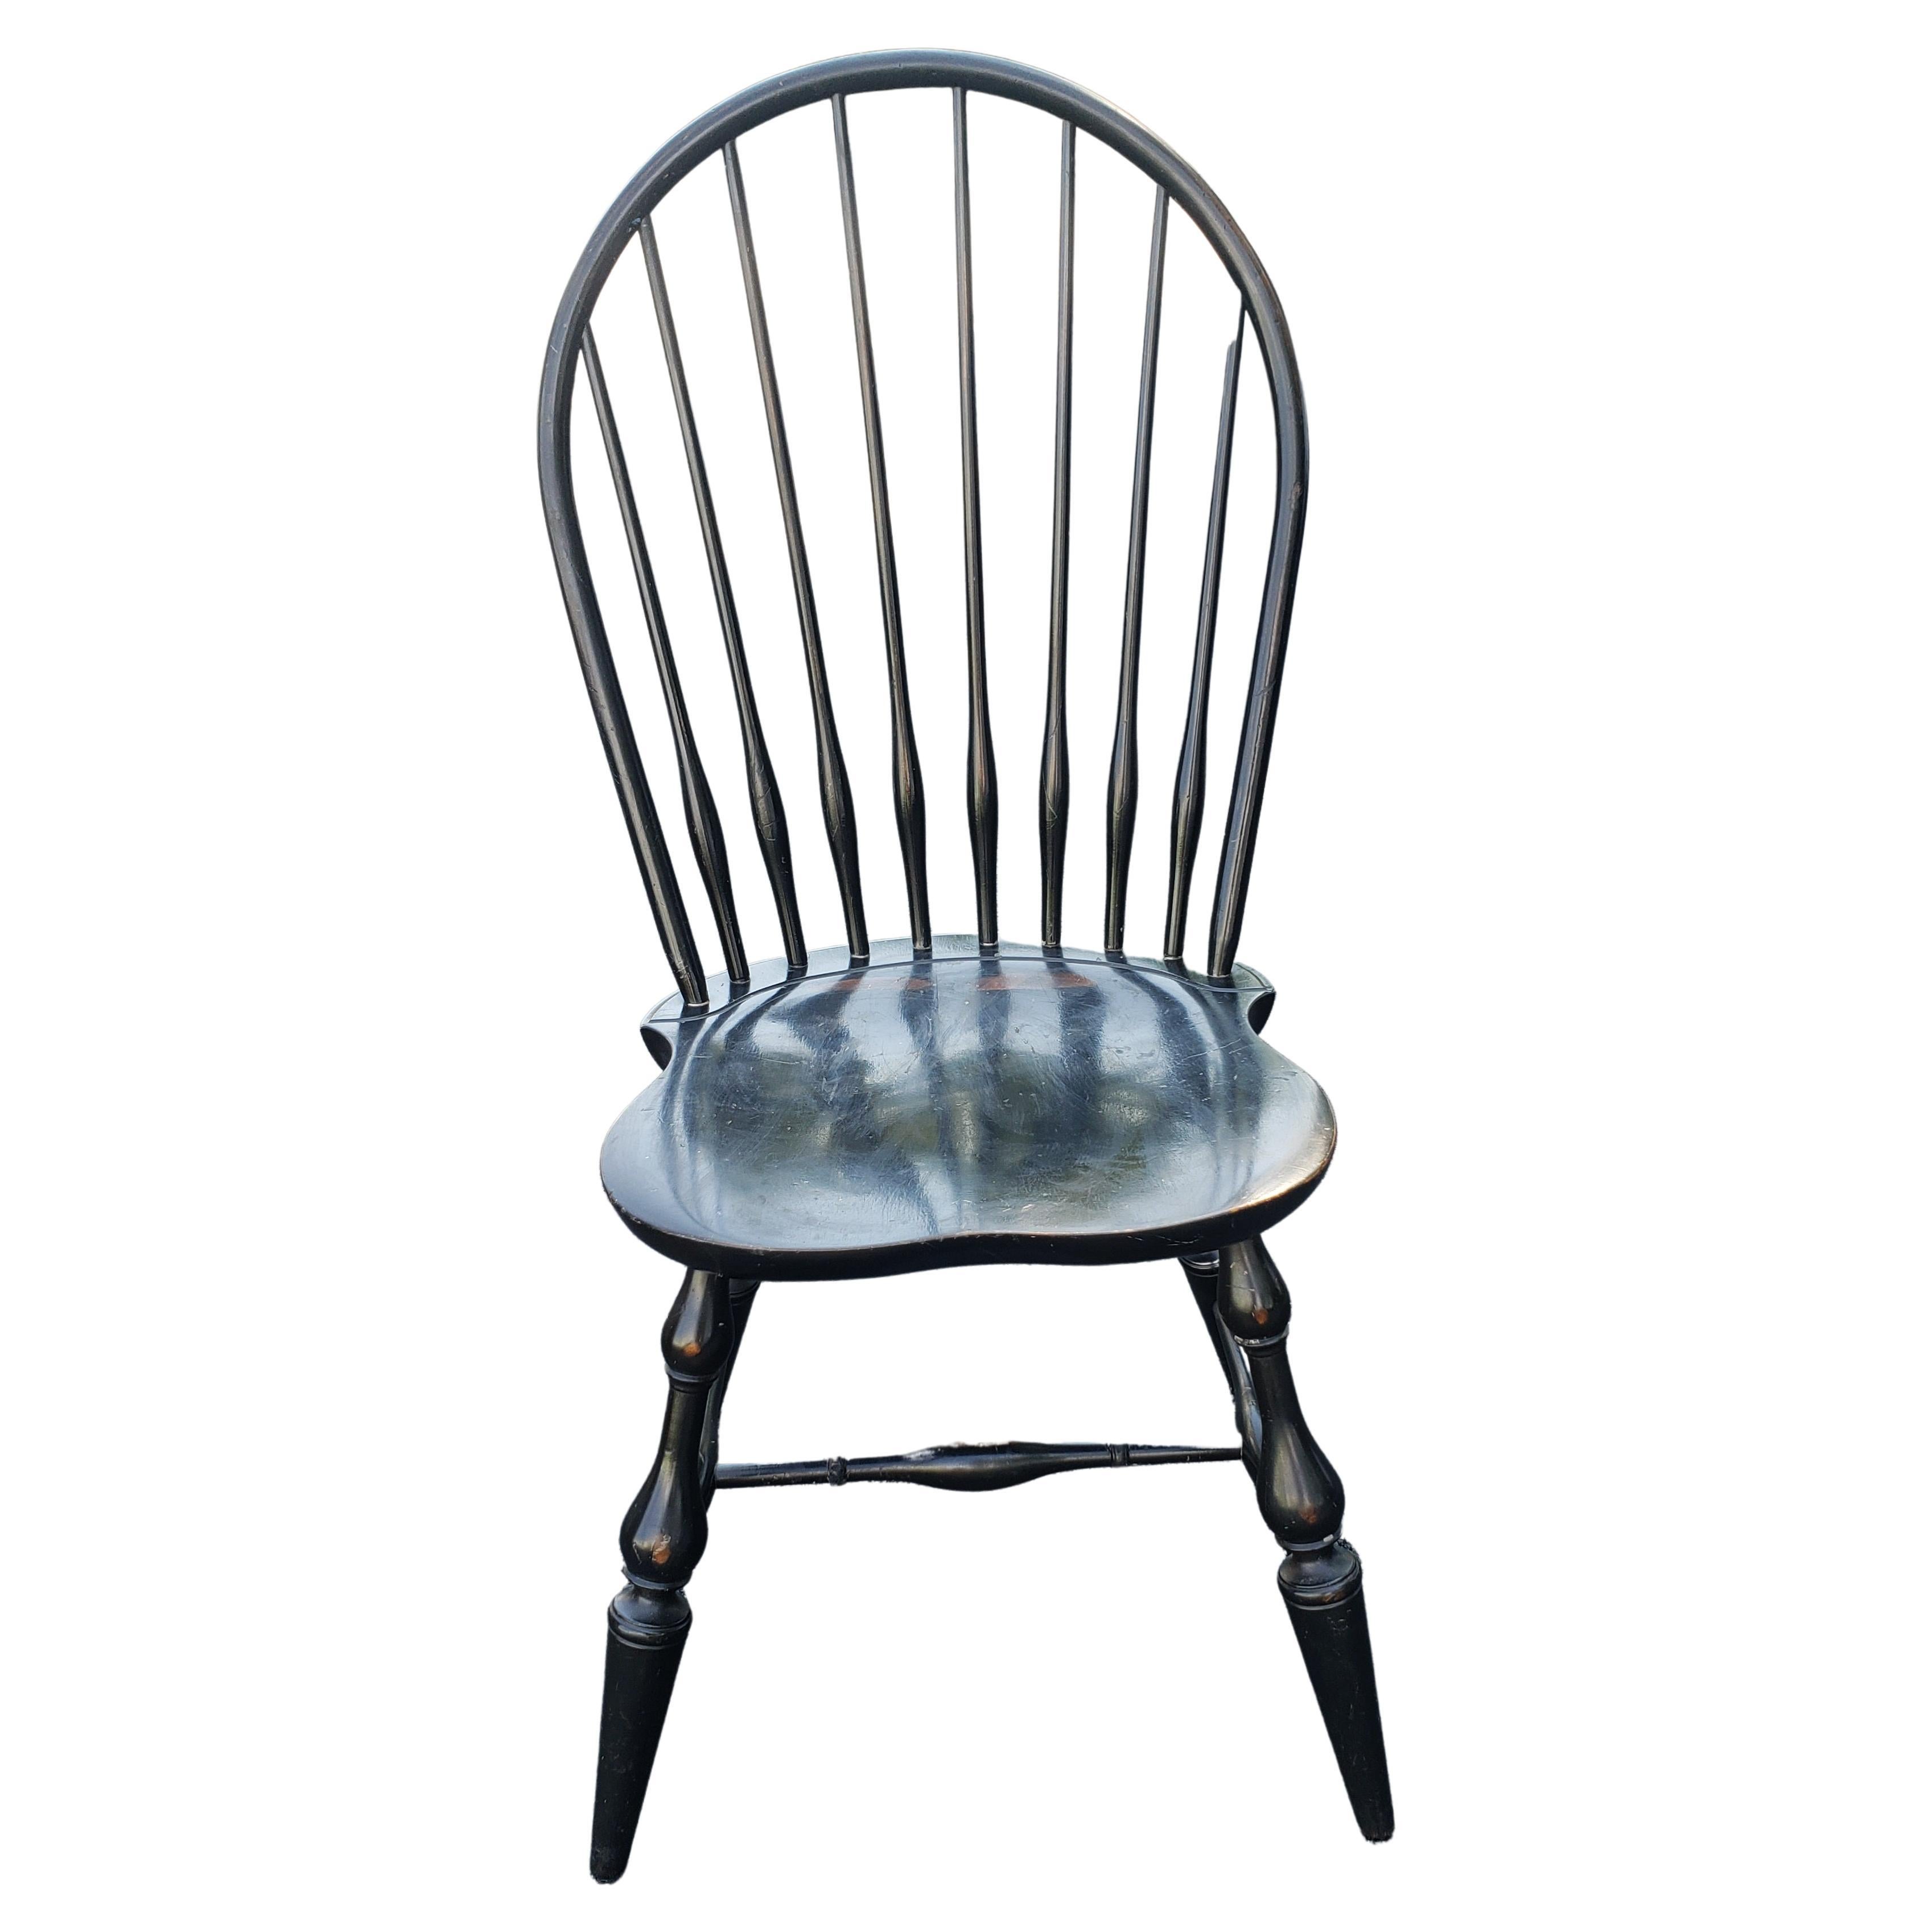 Late 20th Century Nichols & Stone Ebonized Maple Windsor Chair with saddle back seat. 
Measures 20